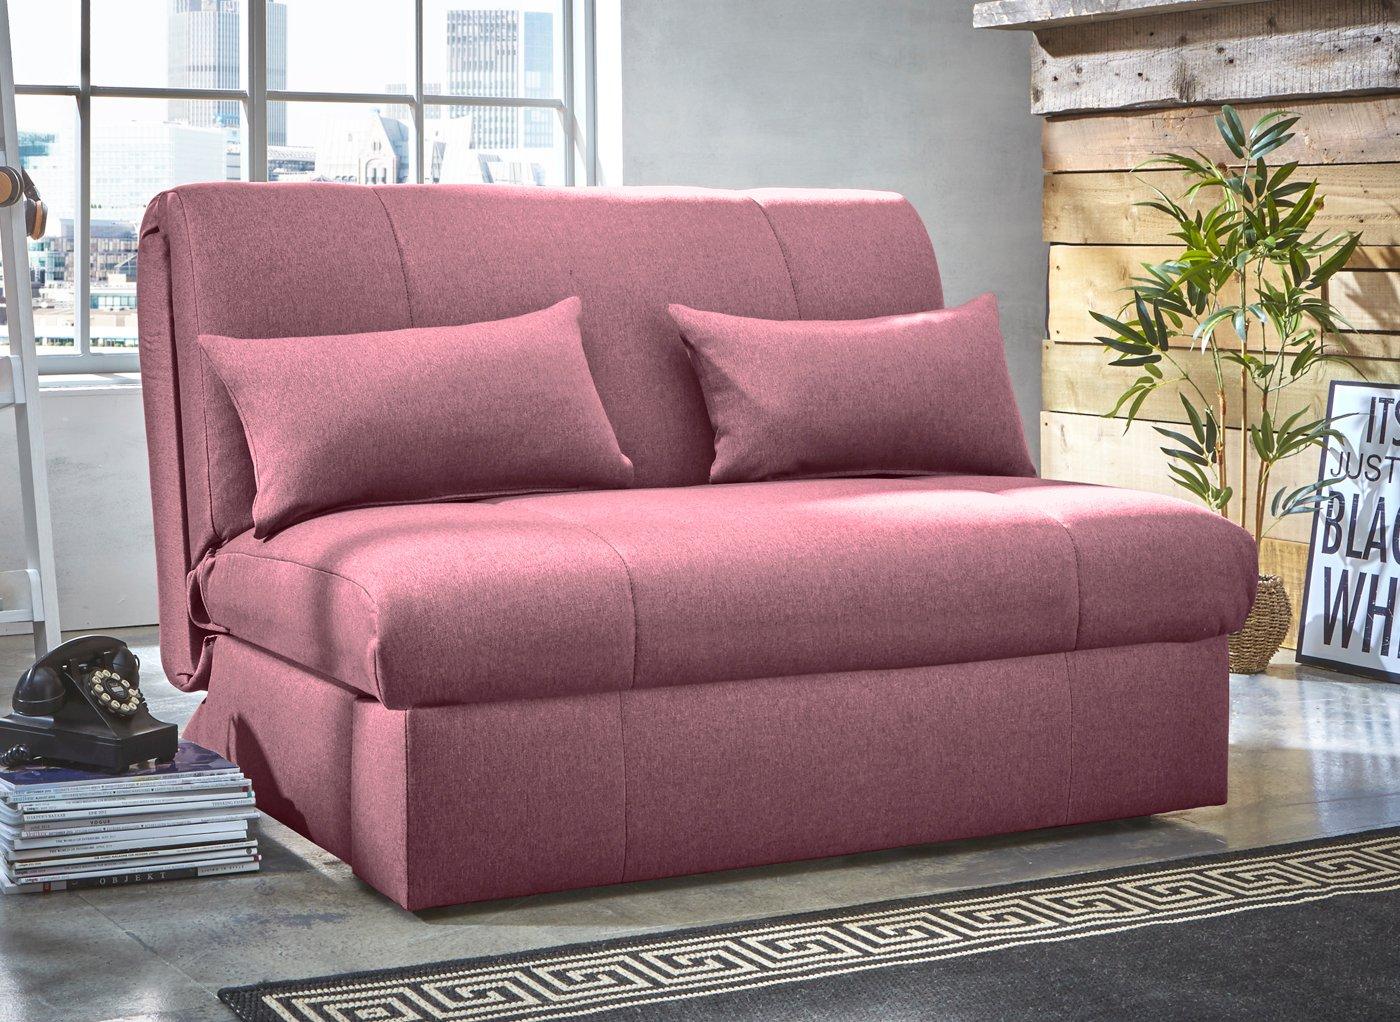 cheap purple sofa beds